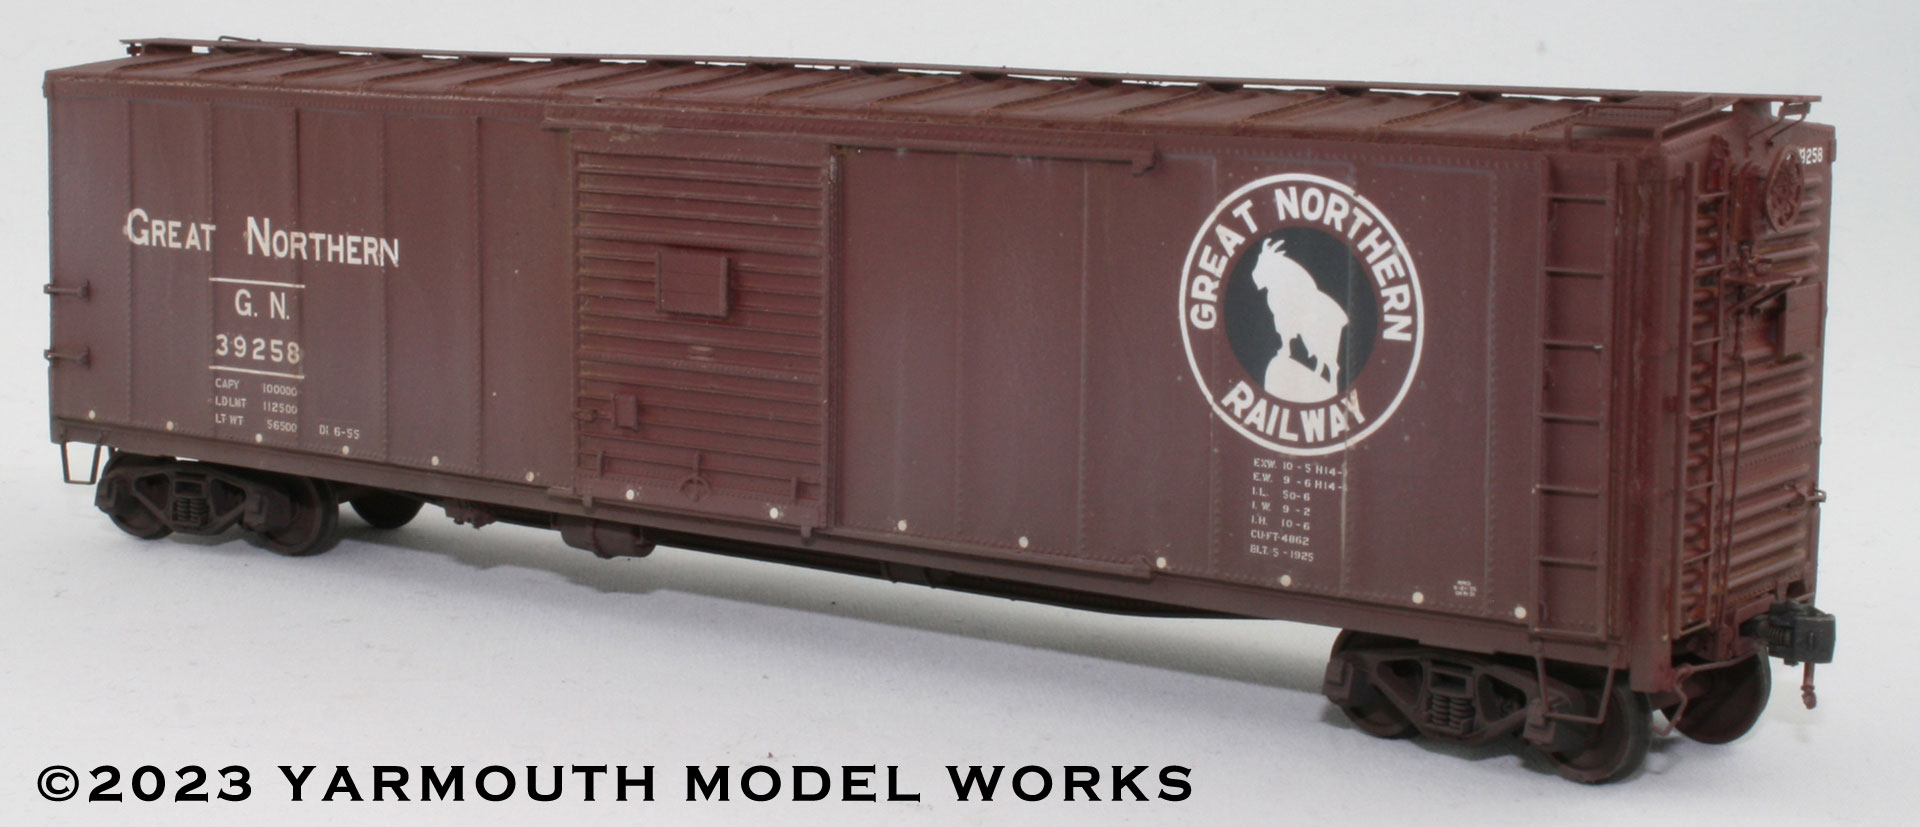 Resin Model Kits - Yarmouth Model Works